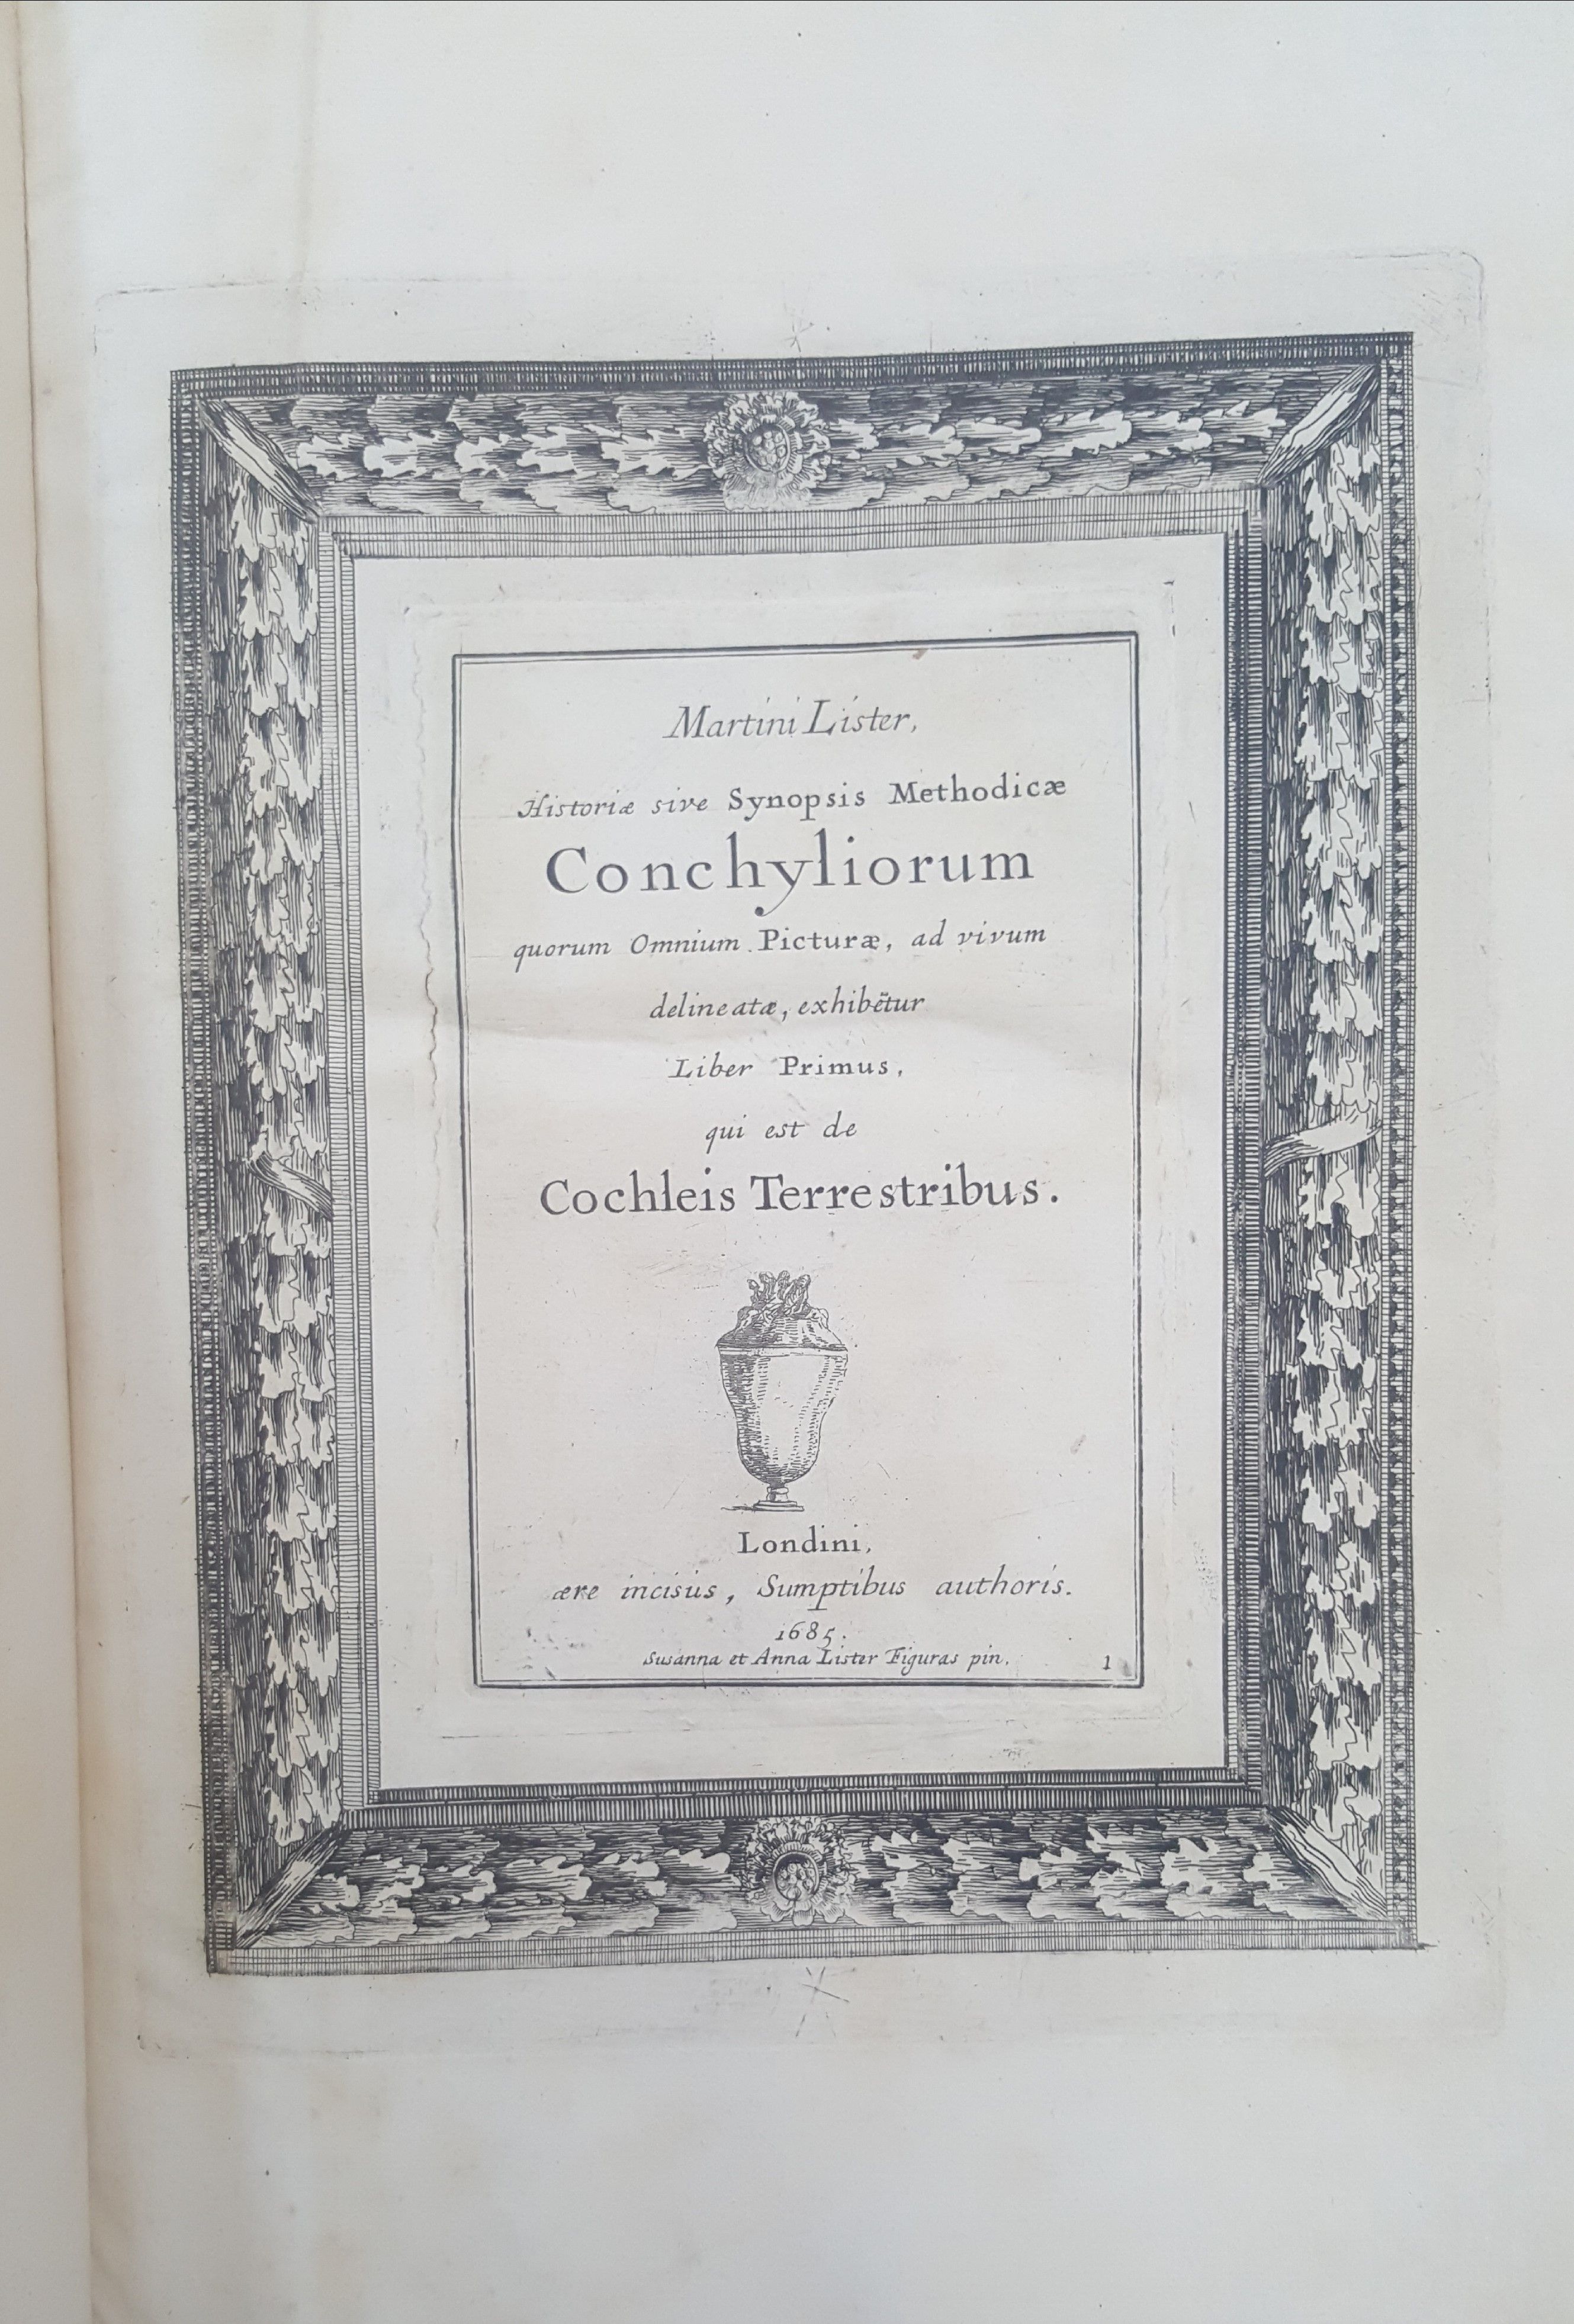 Historiae Conchyliorum by Martin Lister